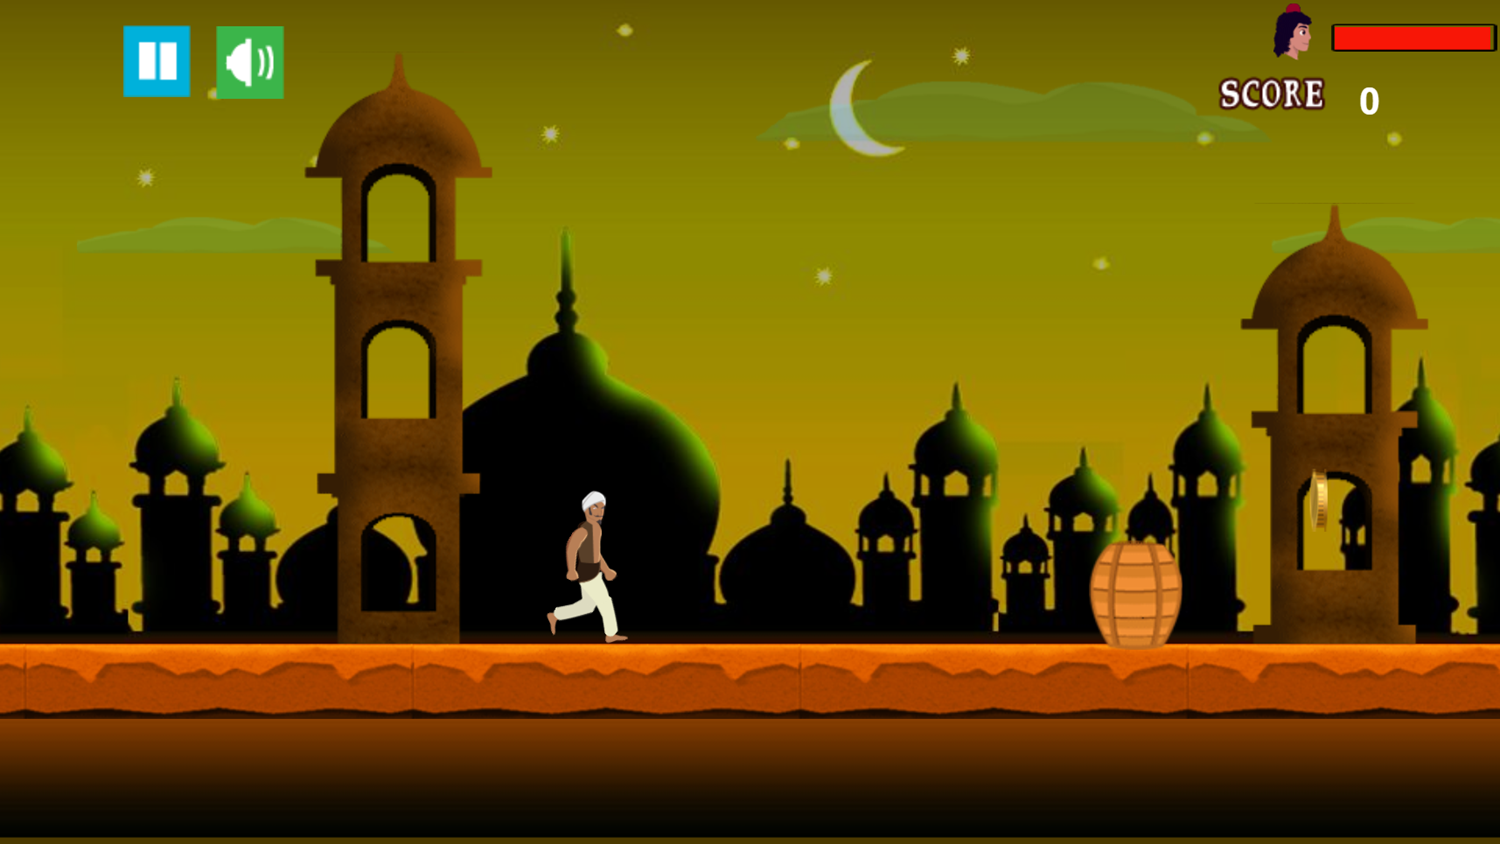 Aladdin Adventure Game Start Screenshot.